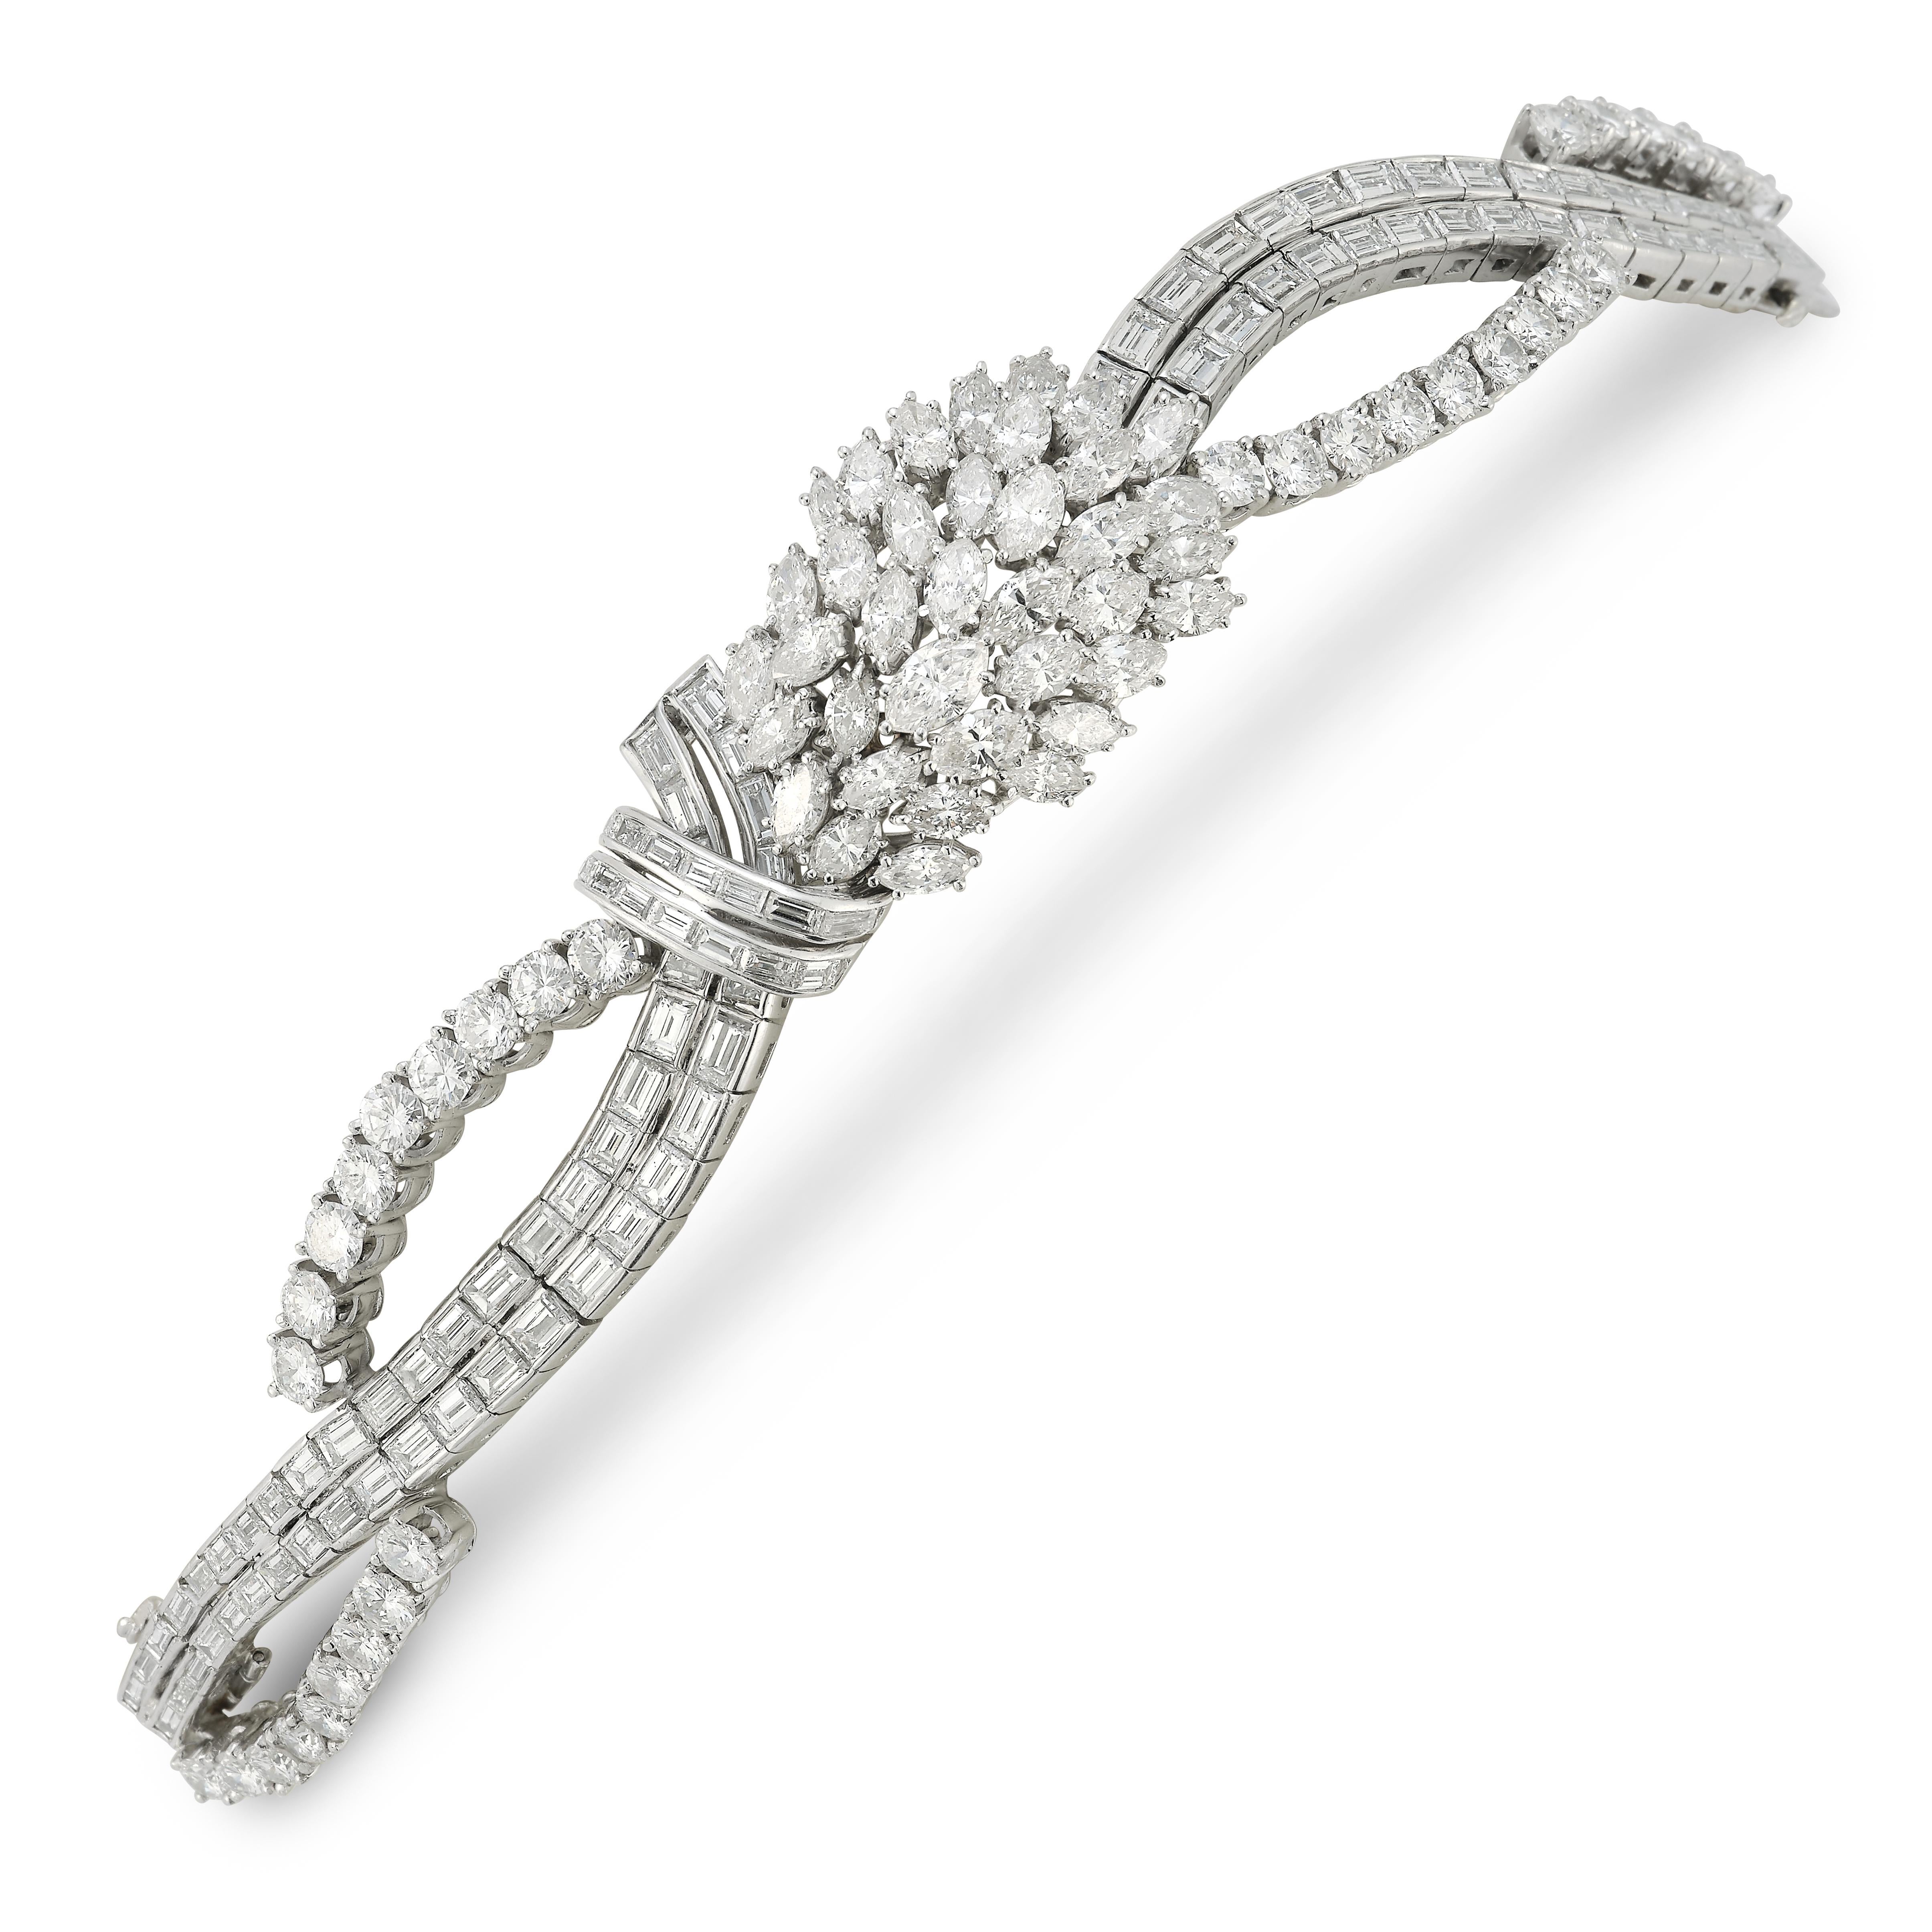 Mid Century Diamond Cluster Bracelet

18 karat white gold bracelet set with 33 round diamonds, 37 marquise diamonds, and 97 baguette diamonds

Approximate Total Diamond Weight: 28 carats

Length: 6.5